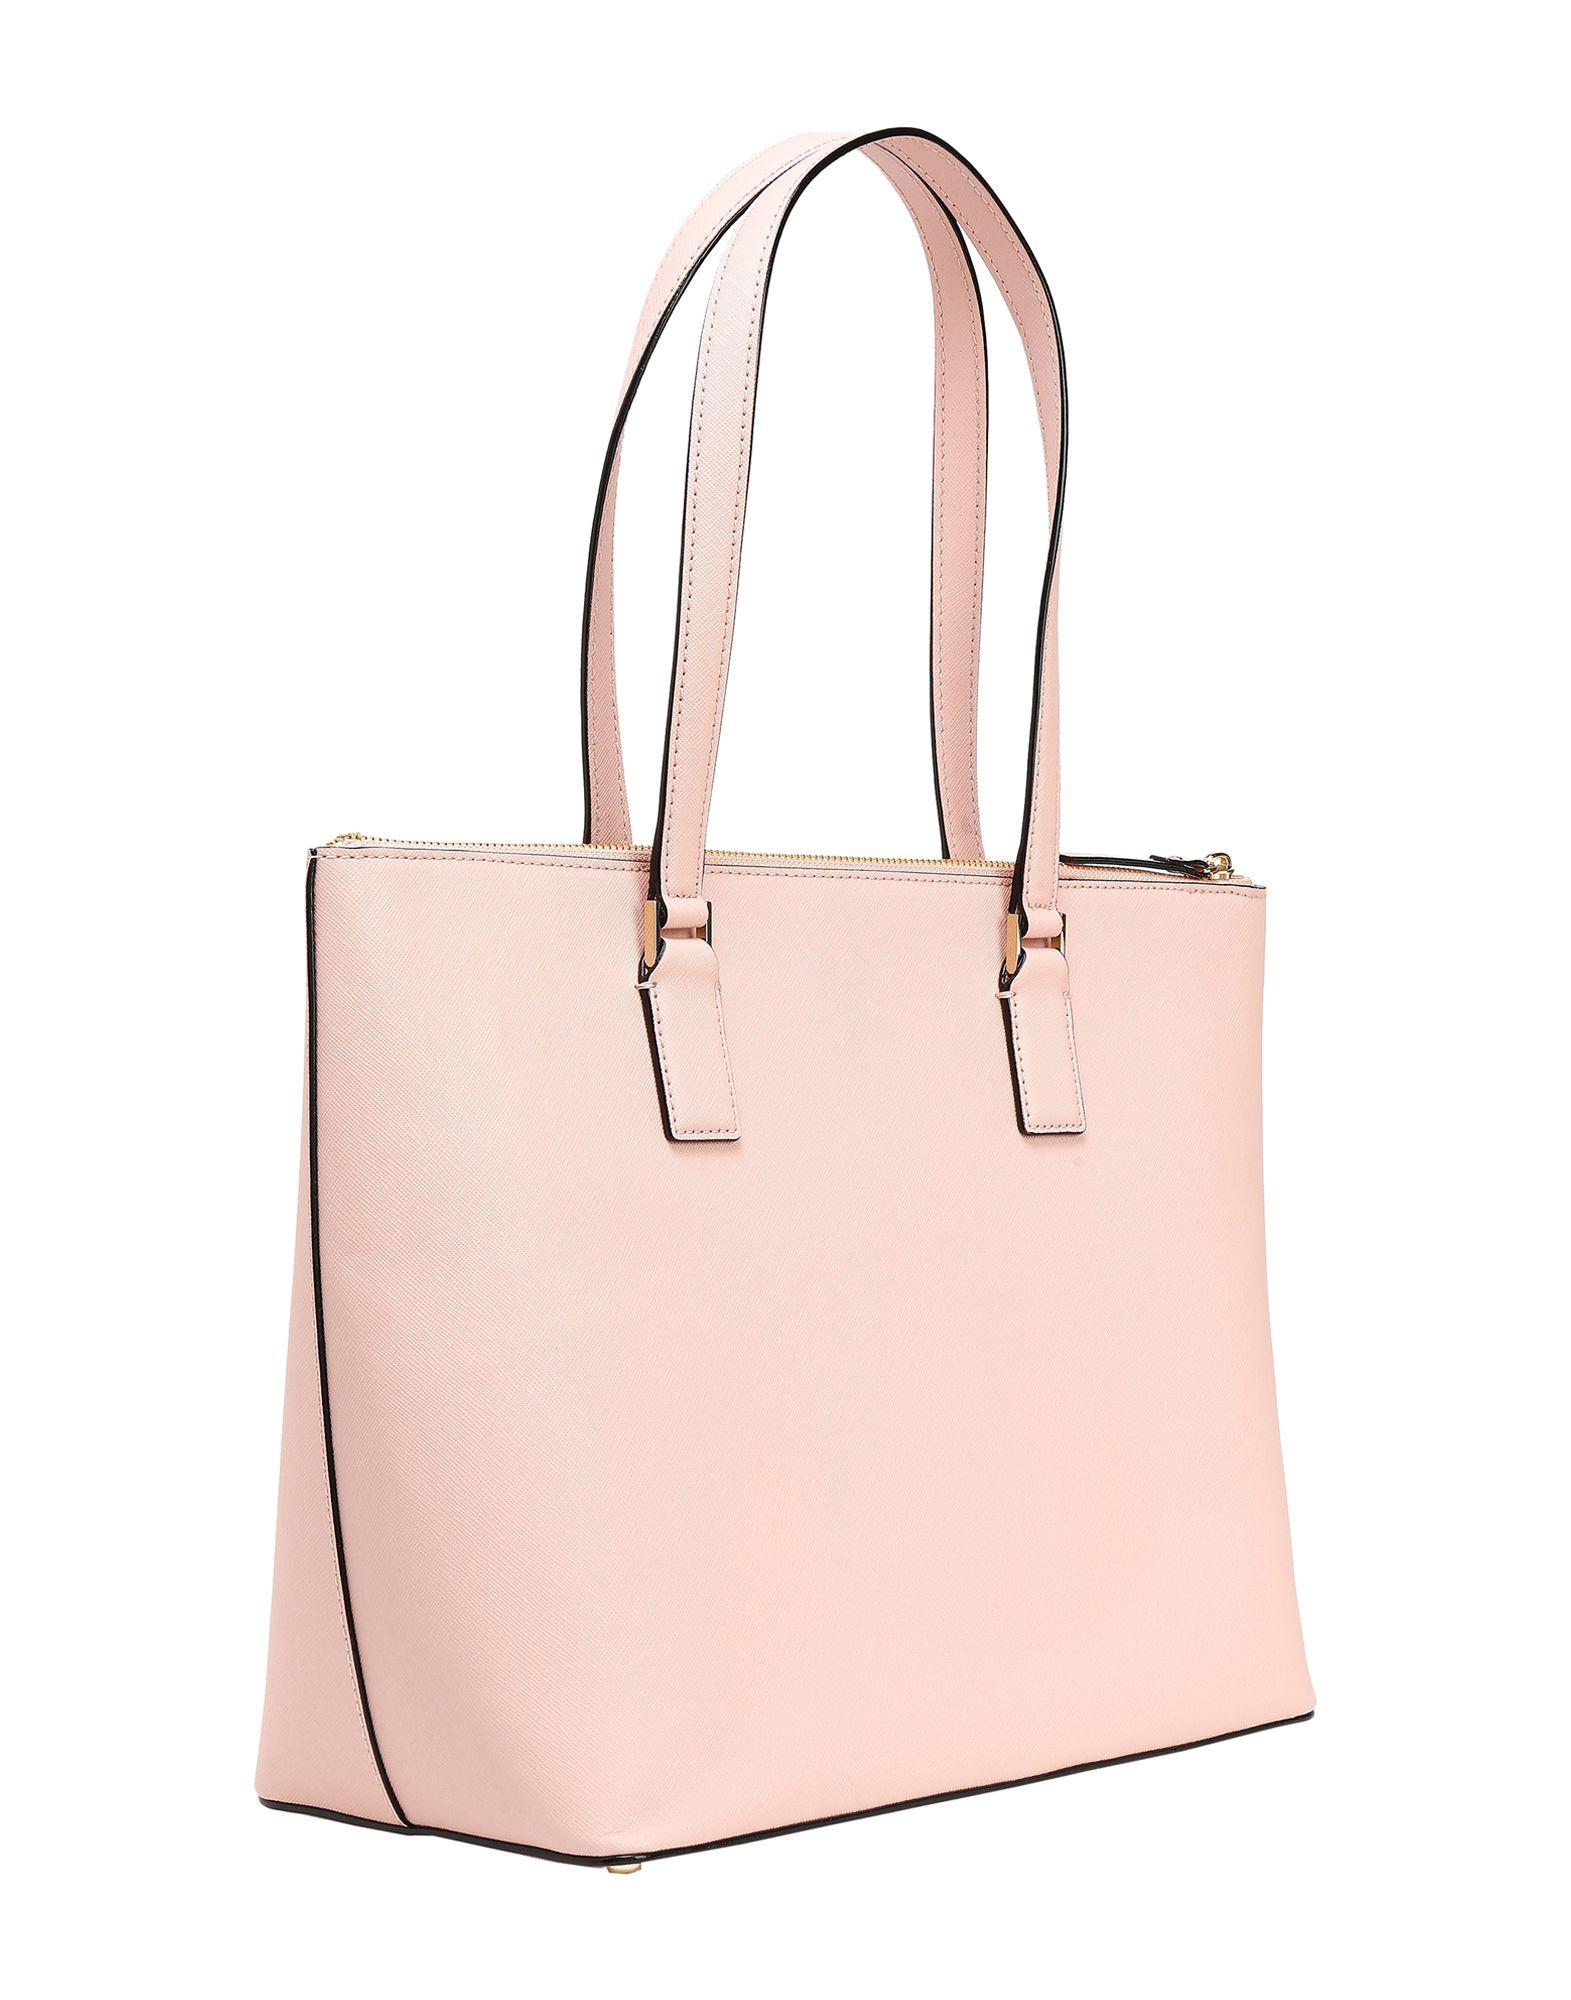 Kate Spade Leather Handbag in Light Pink (Pink) - Lyst